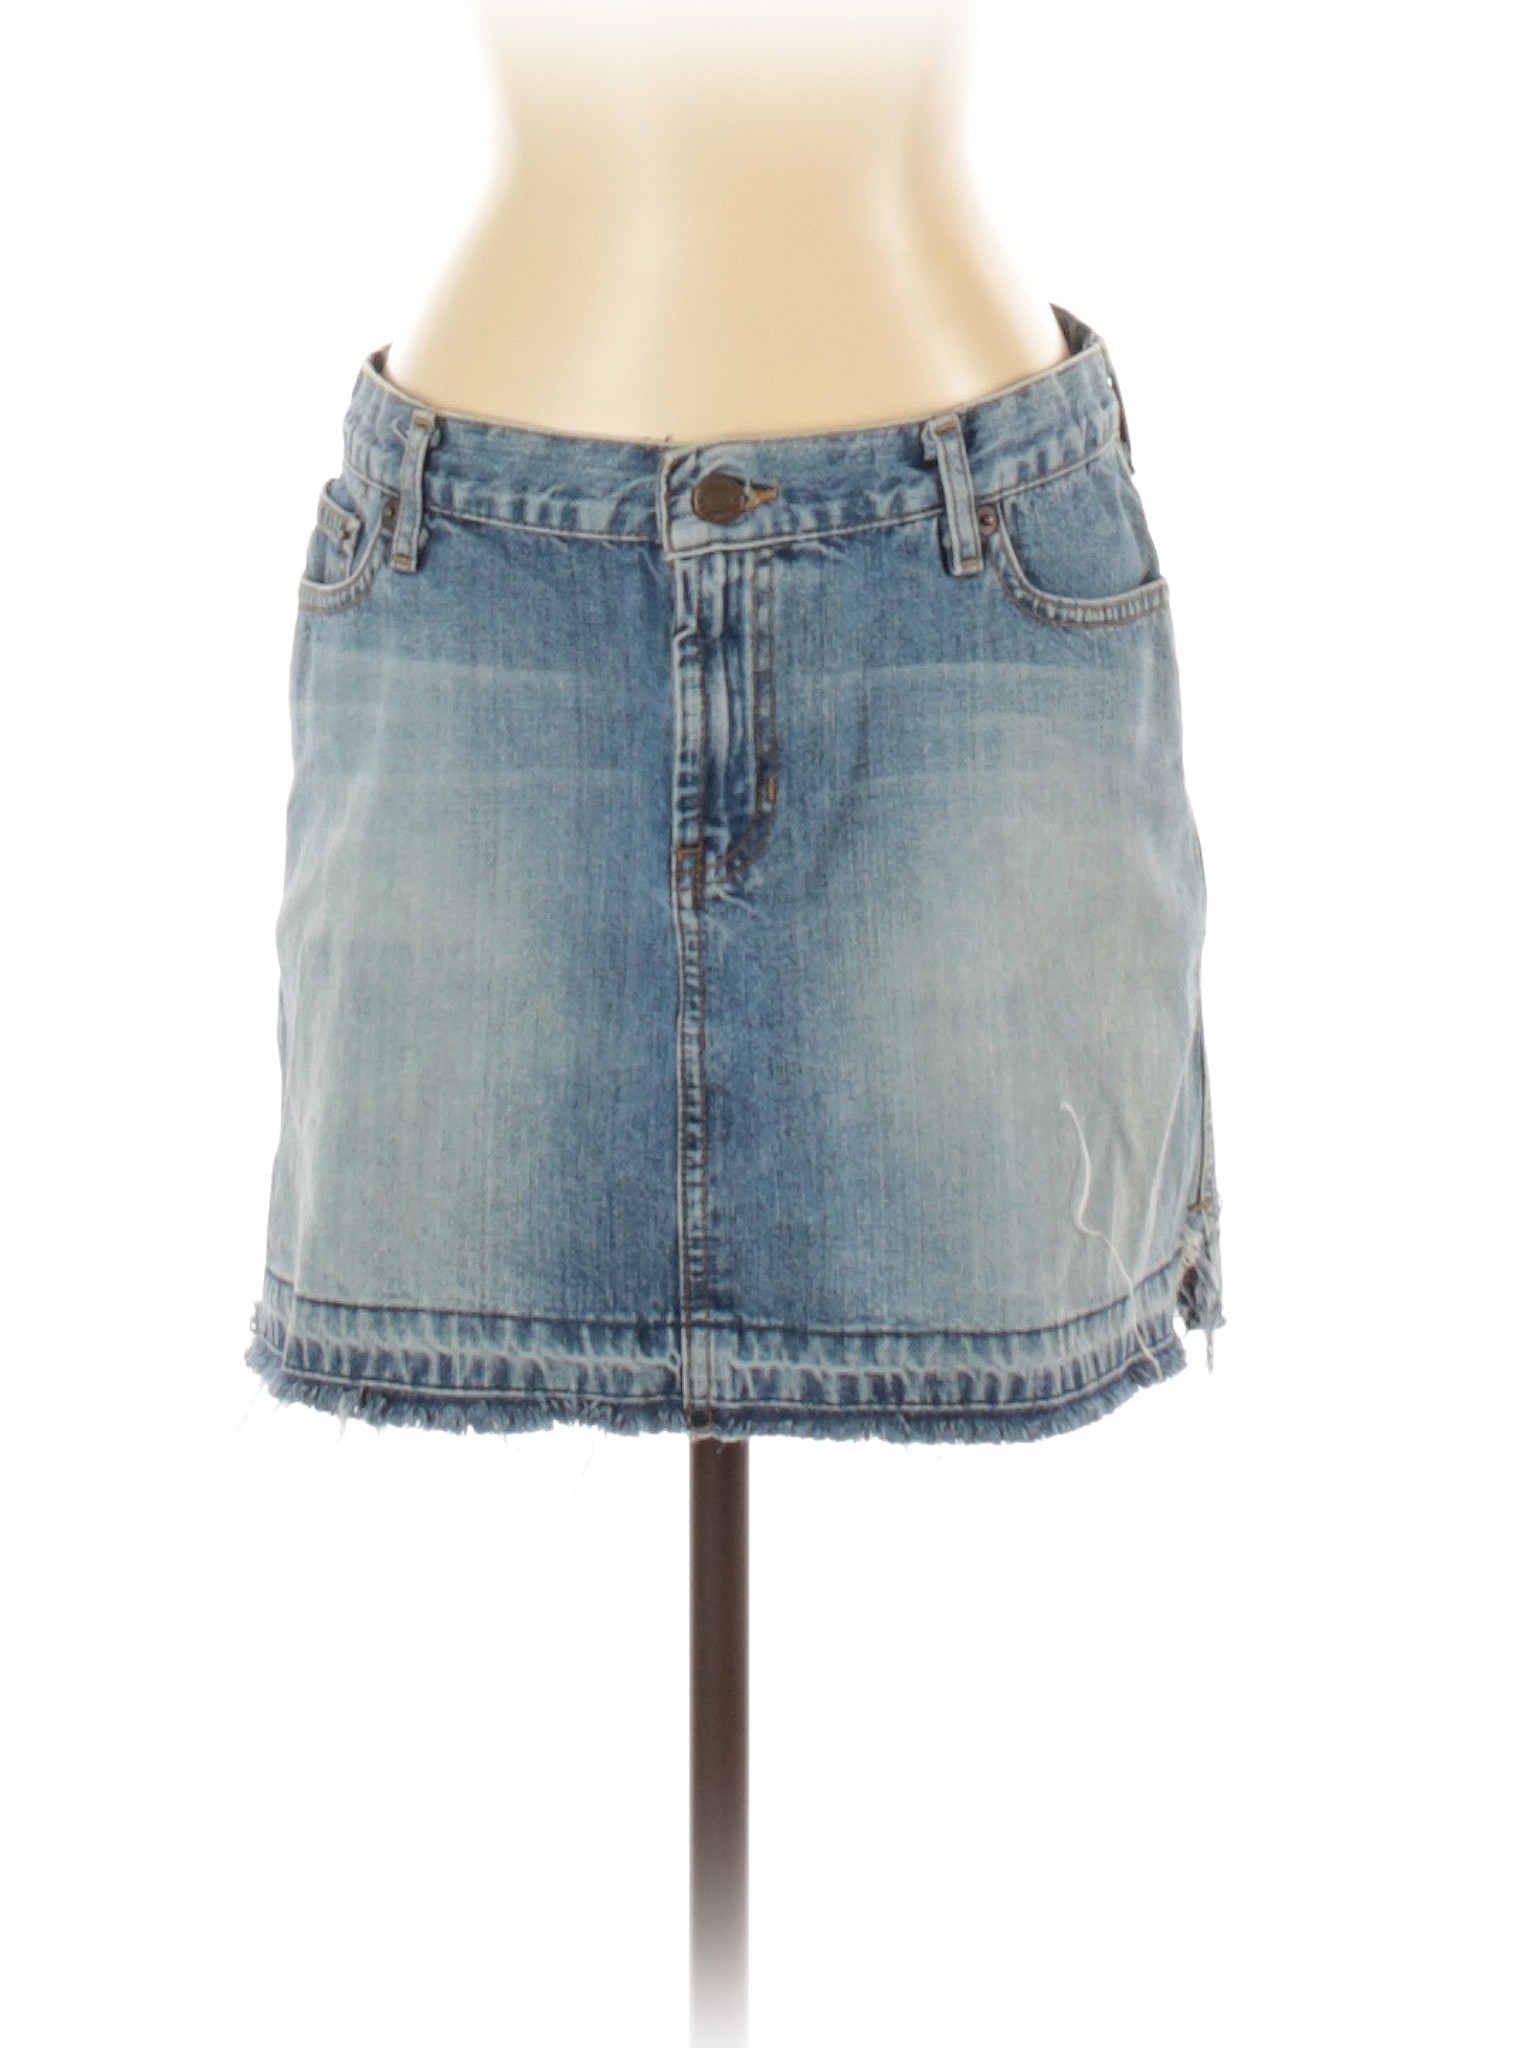 Abercrombie & Fitch Women Blue Denim Skirt 2 | eBay